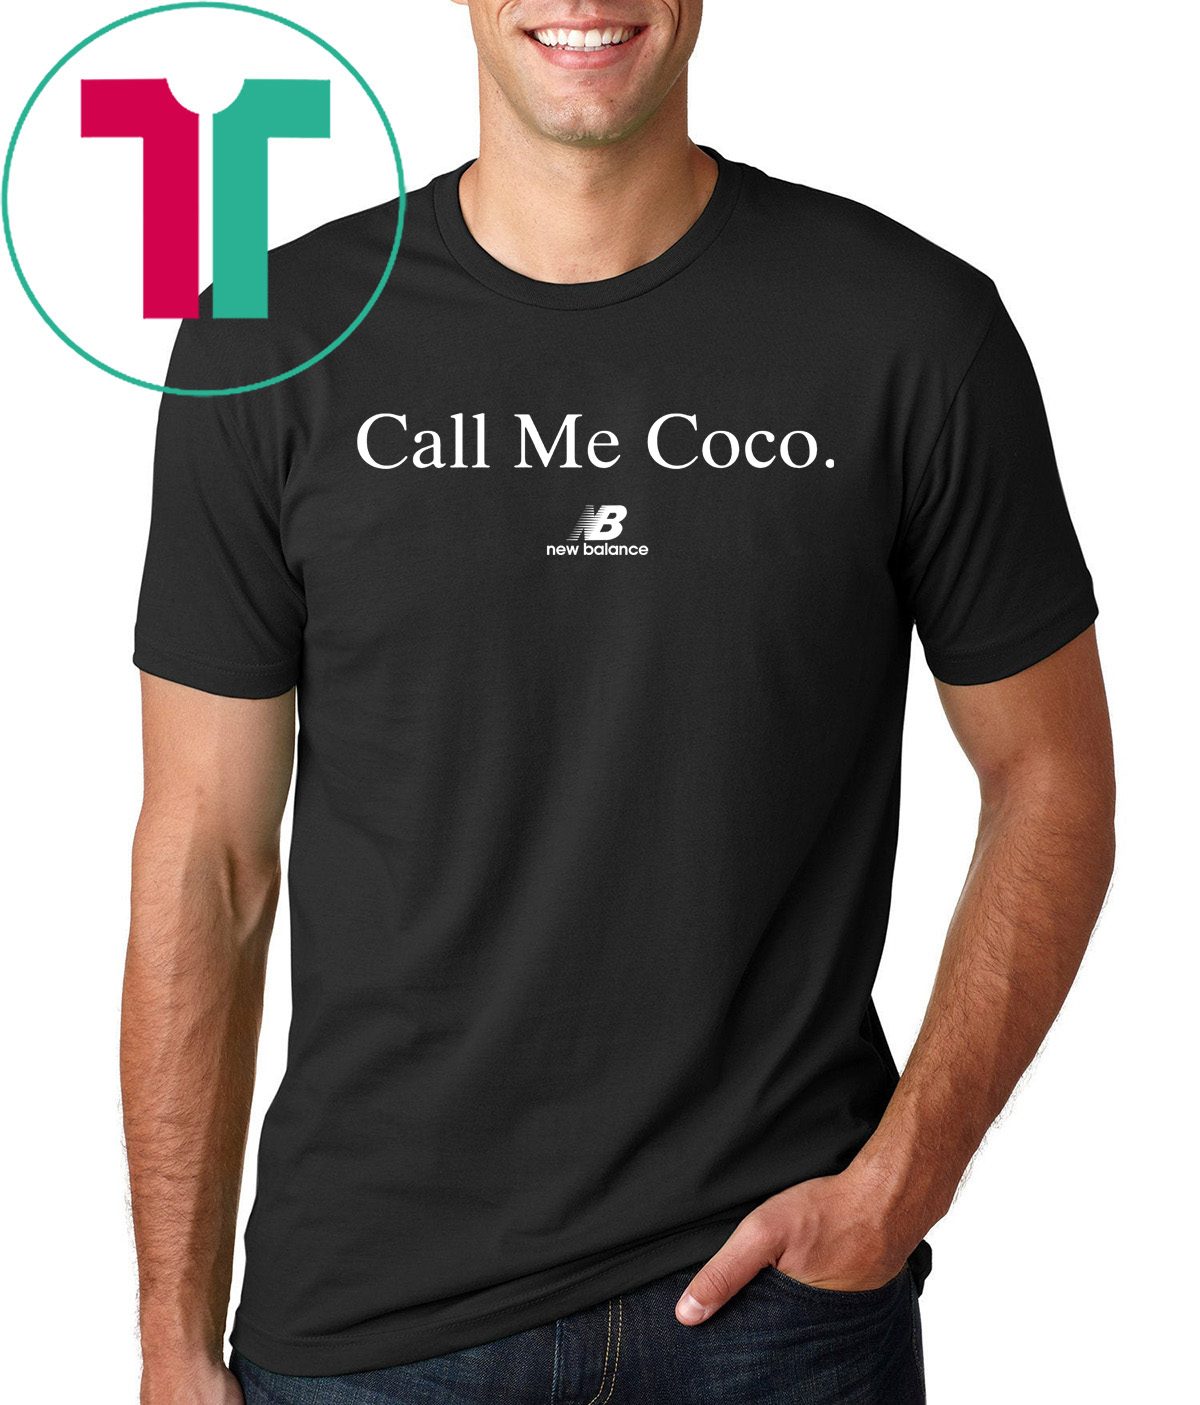 Call Me Coco New Balance Tee Shirt Reviewshirts Office